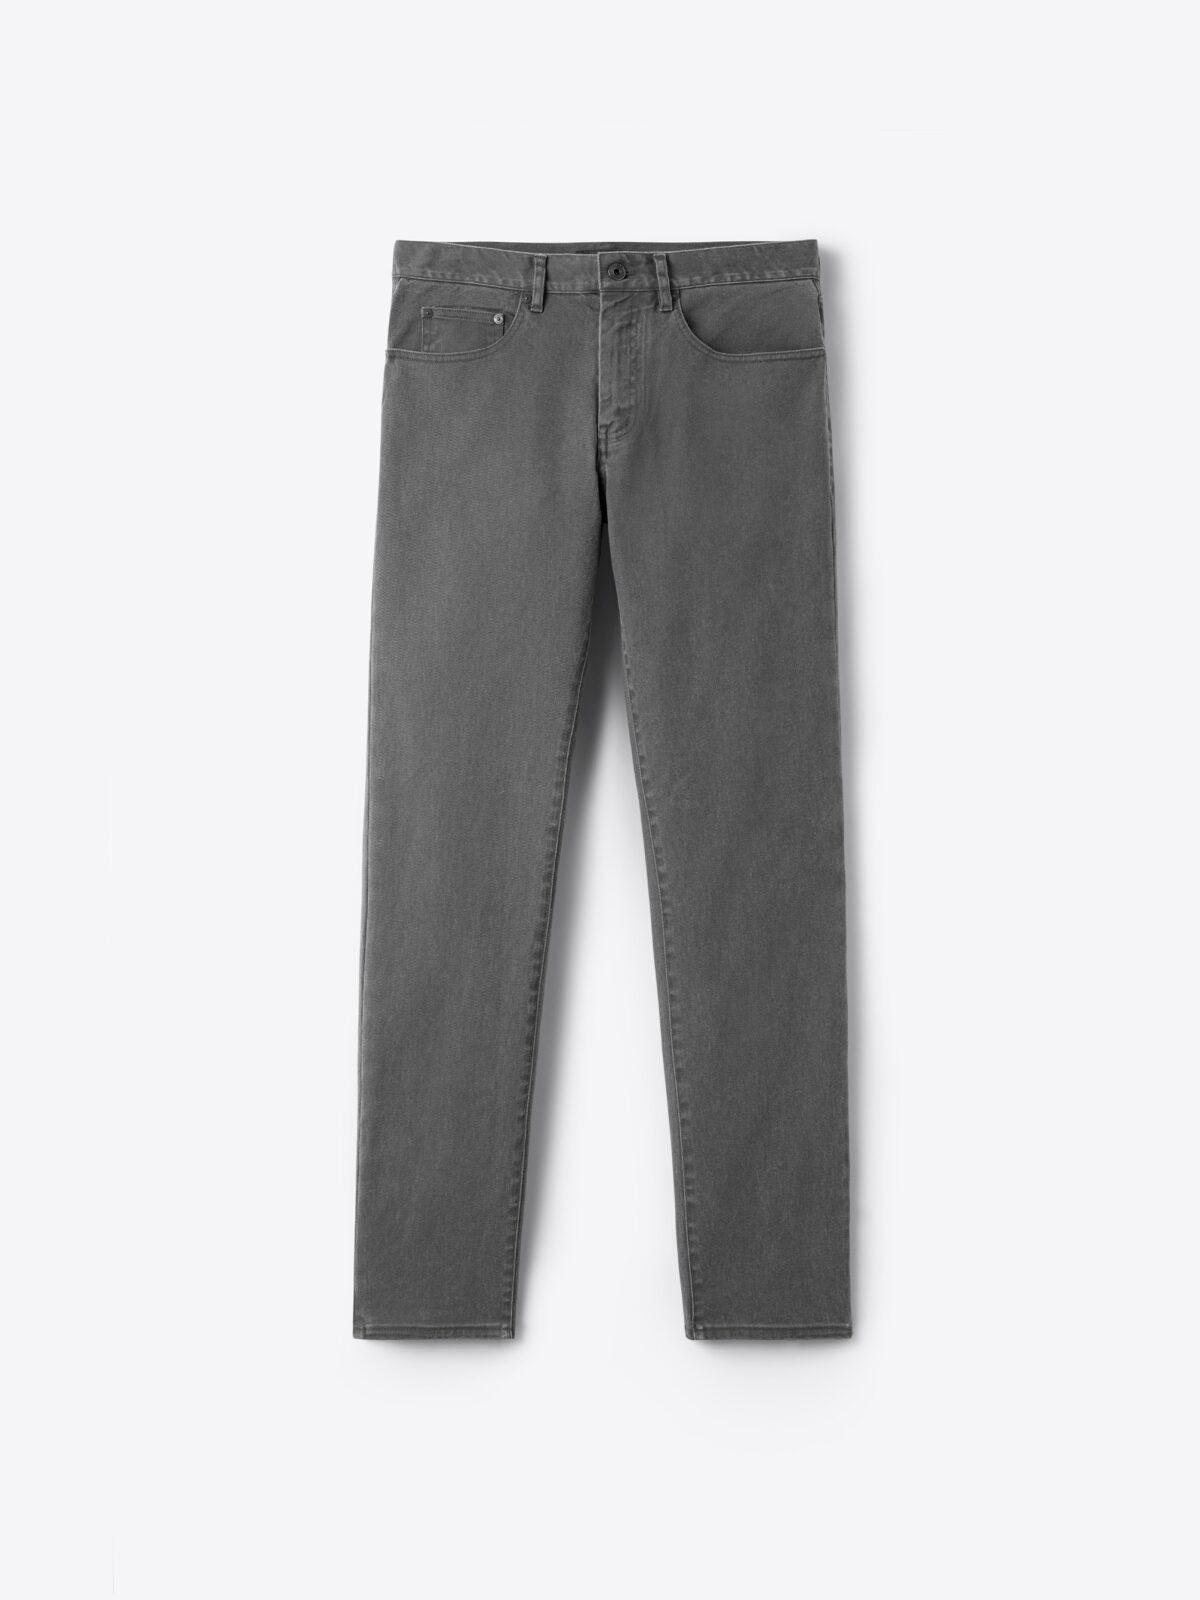 Duca Visconti Charcoal Vintage Wash Stretch Jeans - Custom Fit Pants